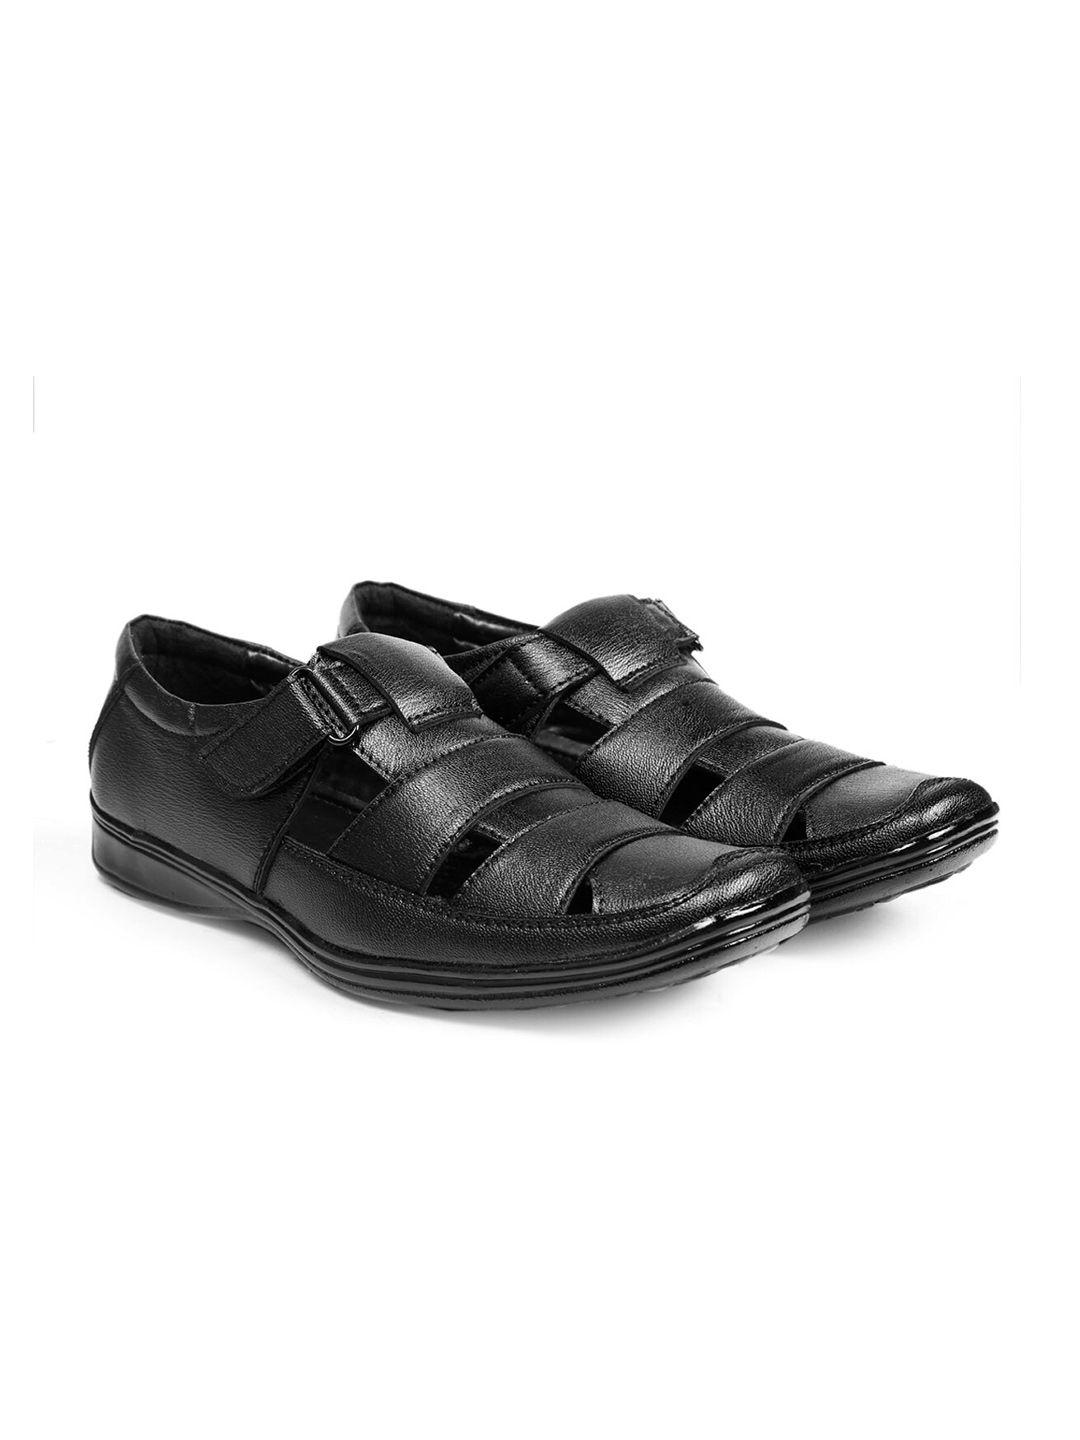 men's black formal roman sandals